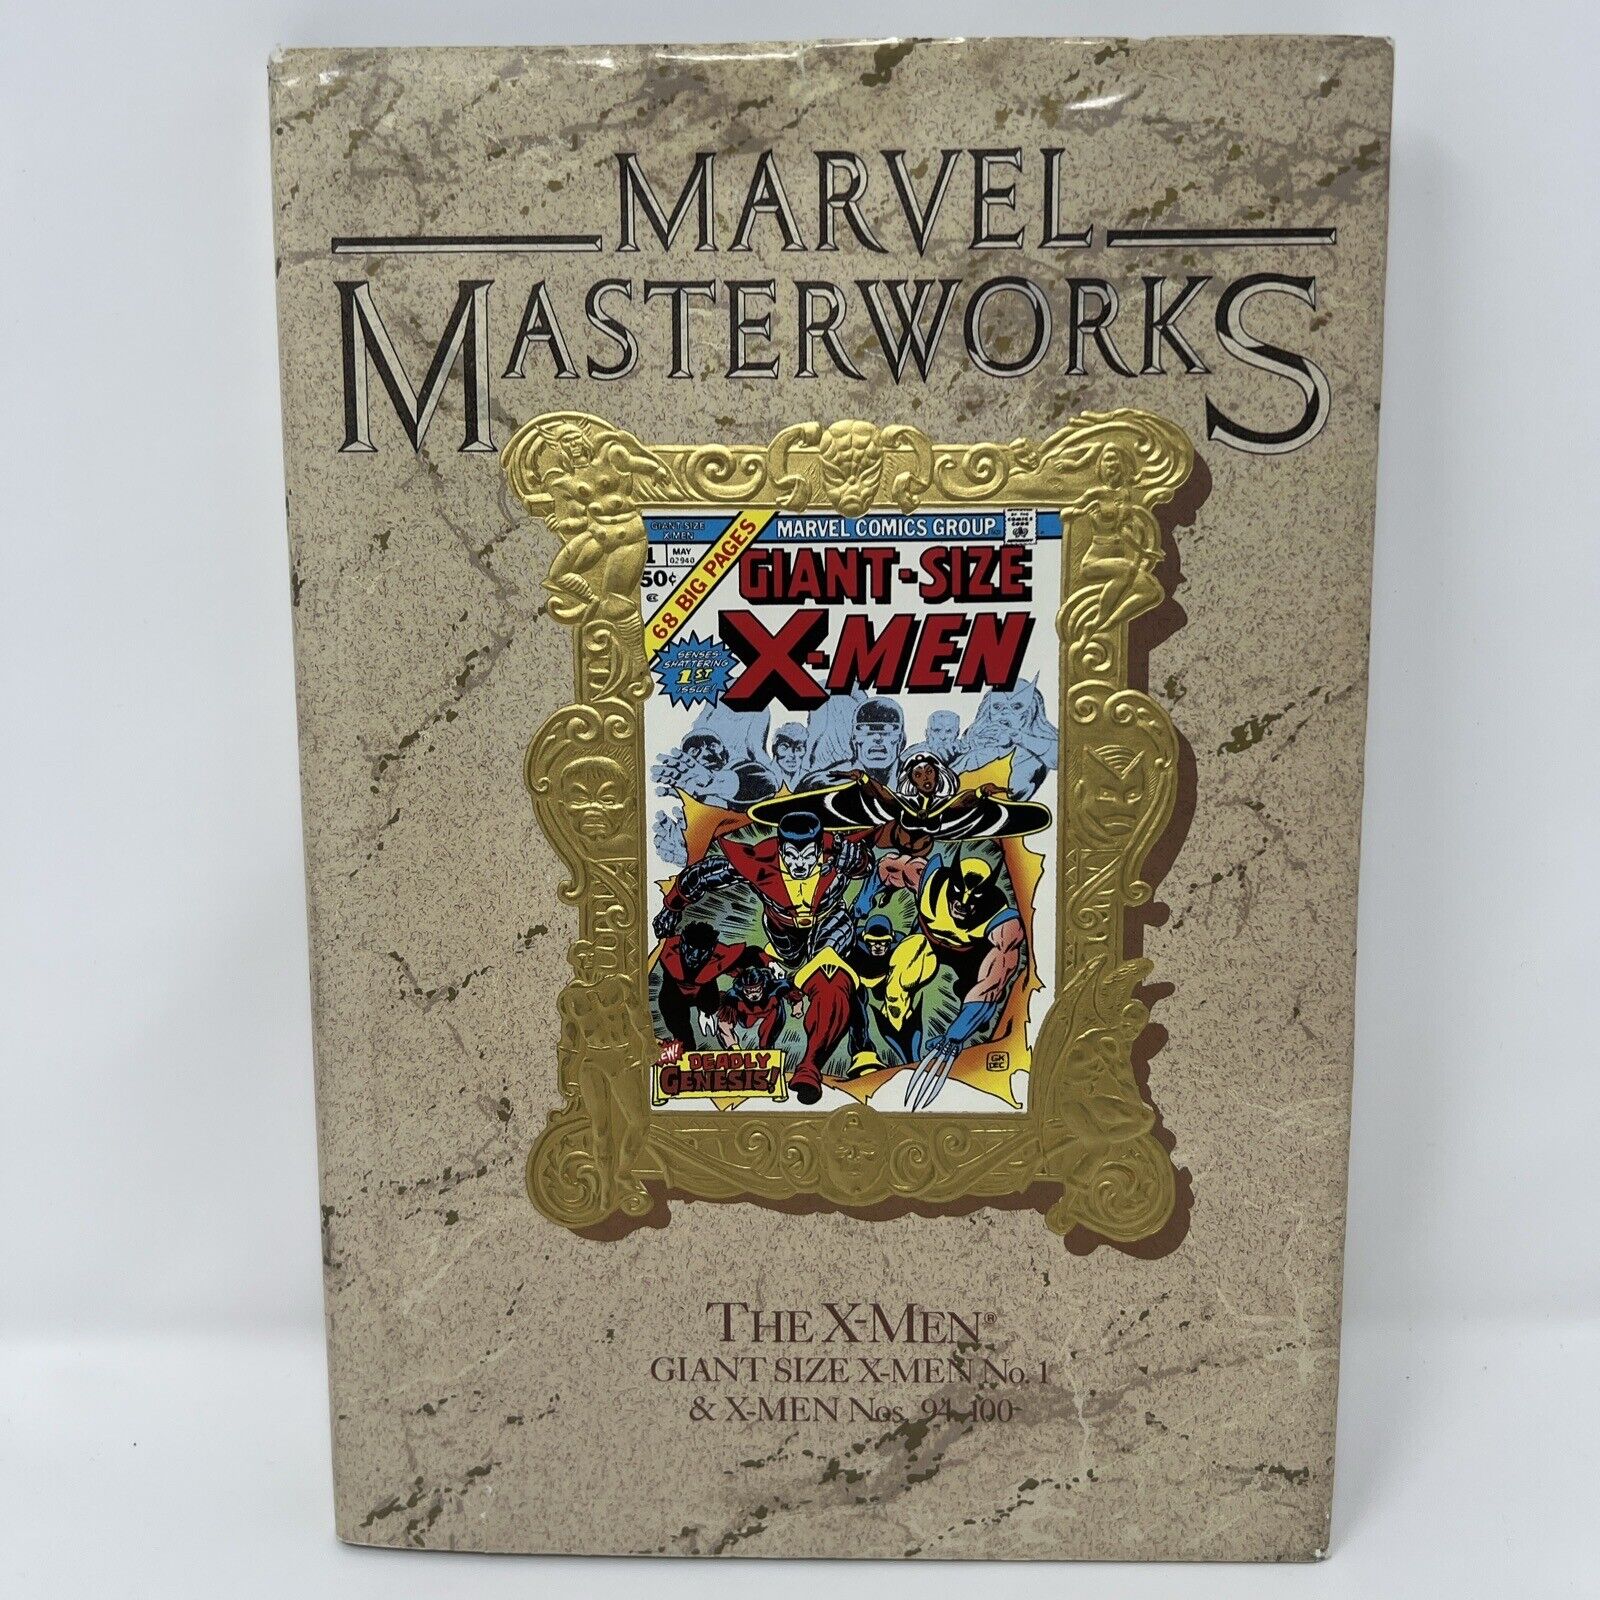 Marvel Masterworks Comics Vol 11 94-100 Giant Size X-Men Signed Chris Claremont